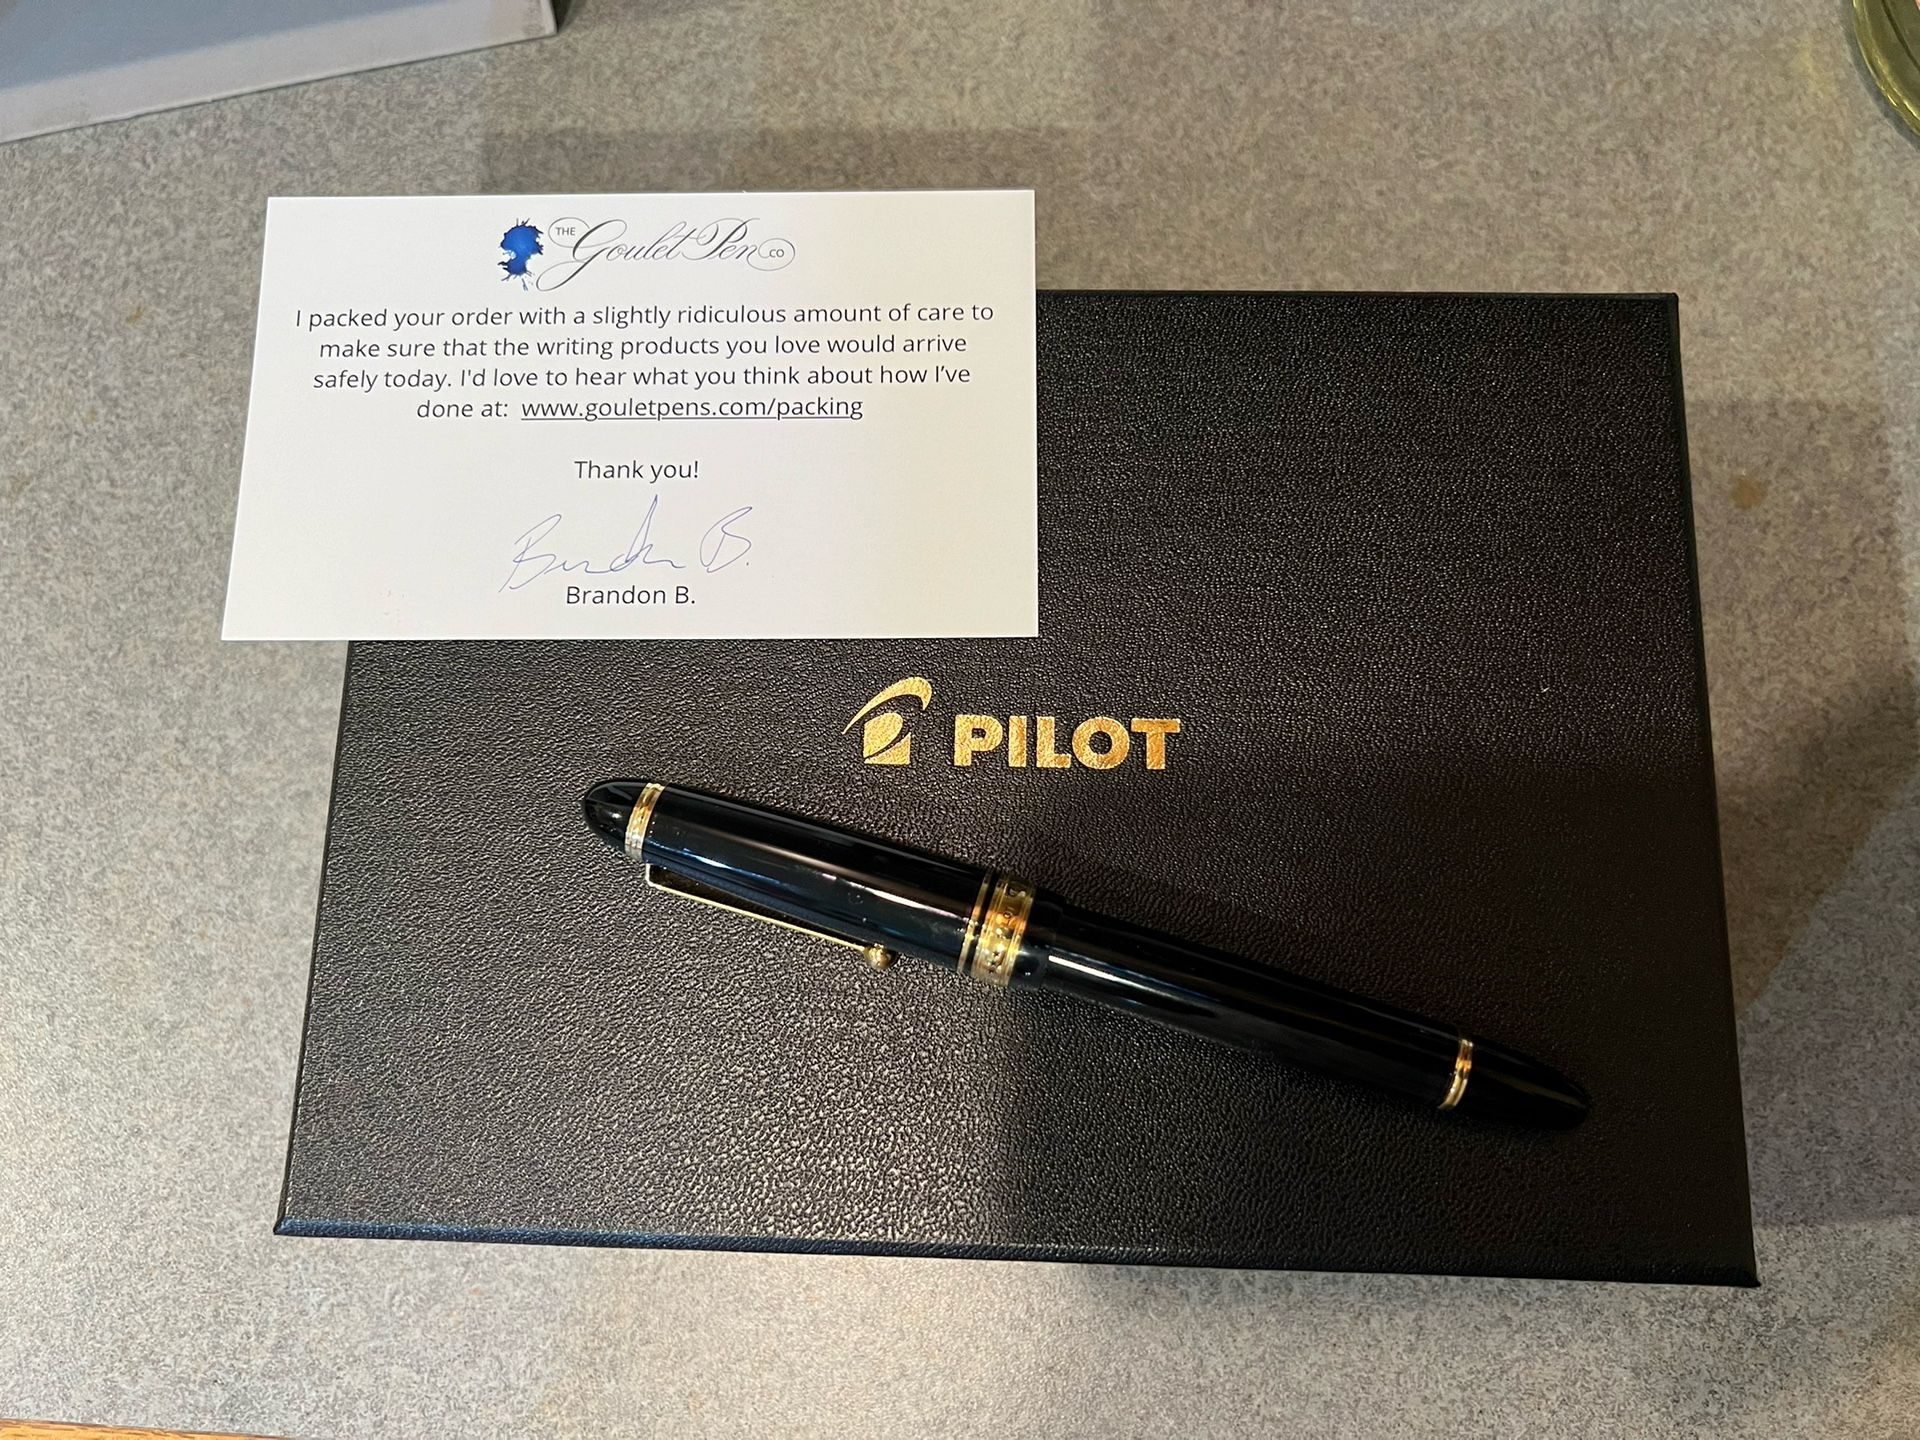 Pilot CUSTOM 823 Black (Smoke) Fountain Pen - ‎14k Gold Nib Size Broad (B)